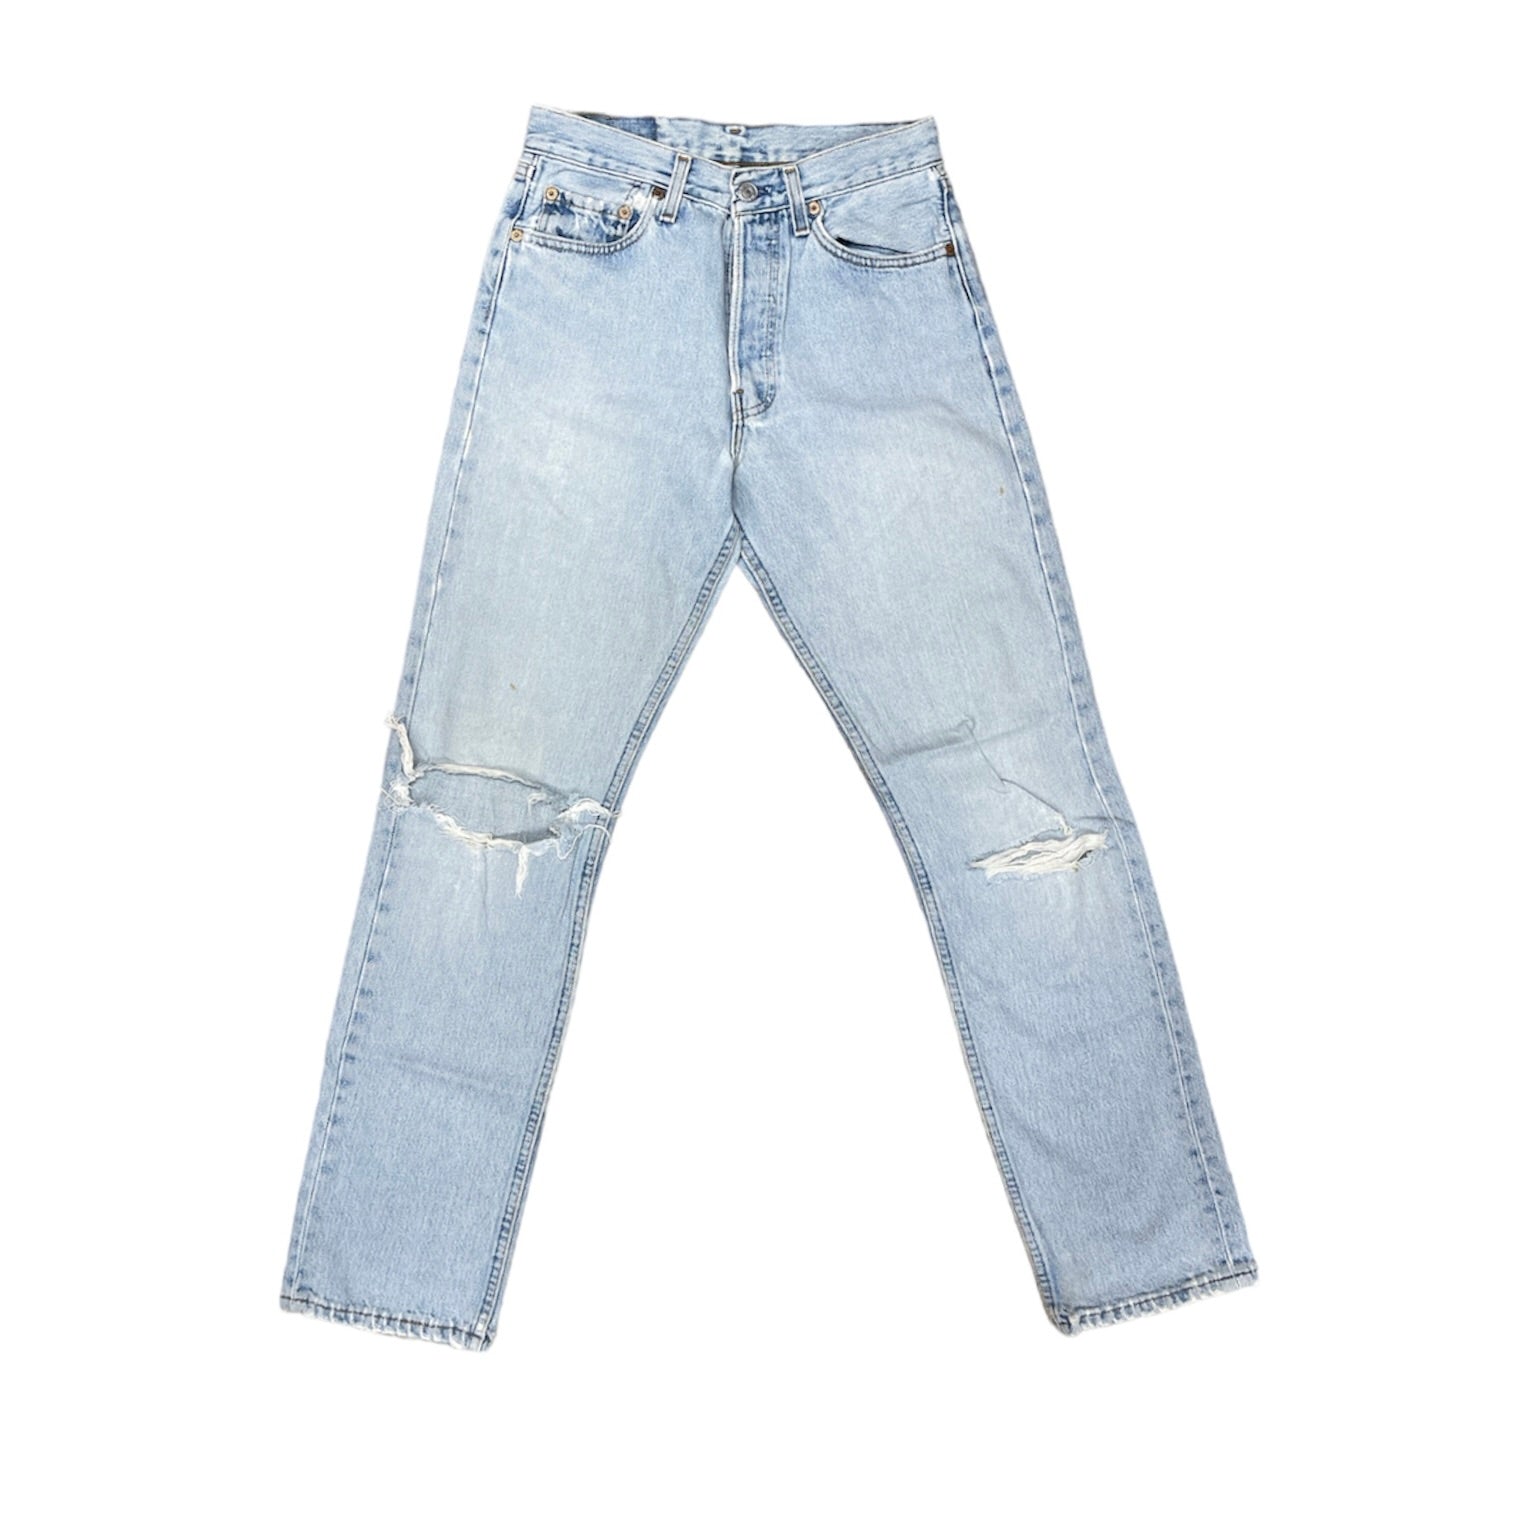 Vintage Levis 501 Light Blue Distressed Jeans (W28/32)